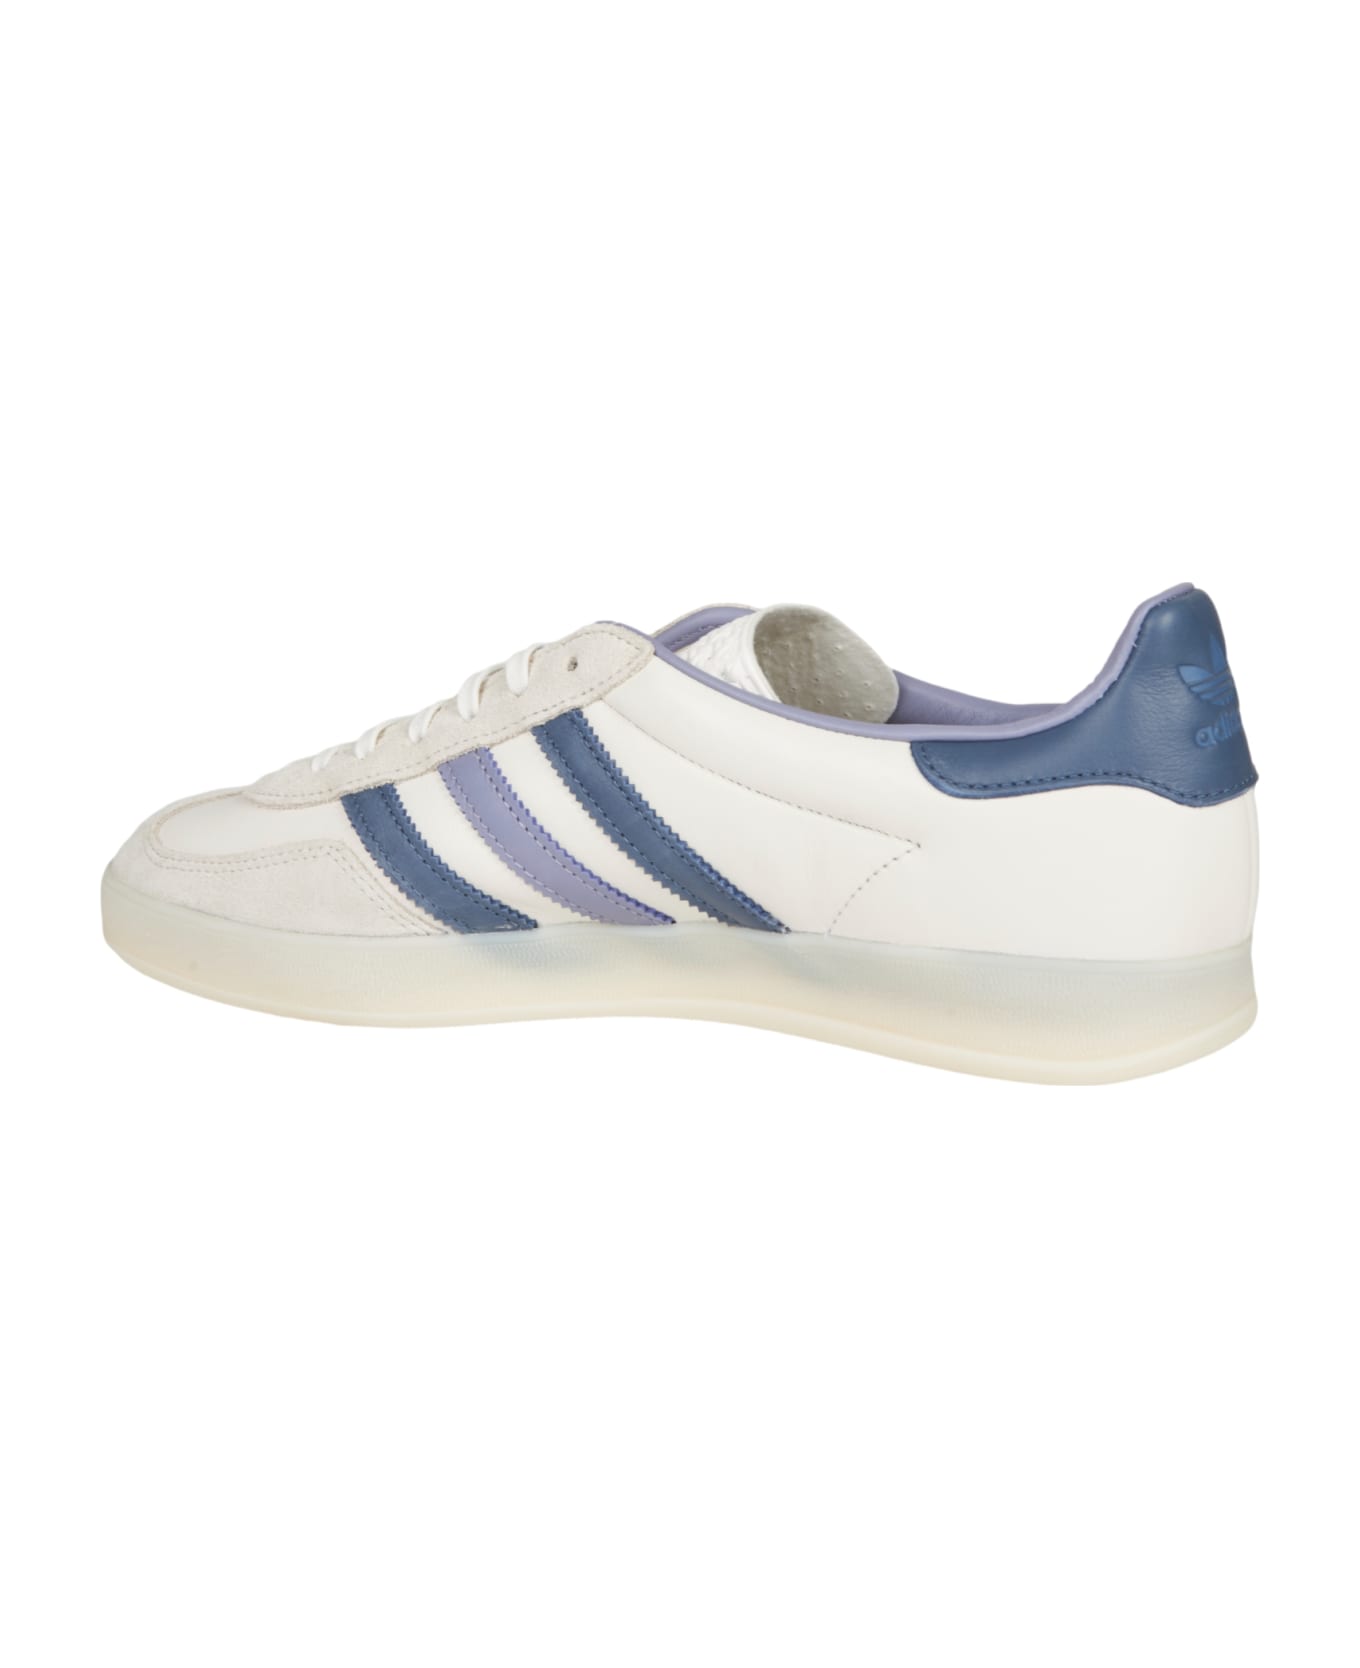 Adidas Gazelle Indoor Sneakers - White